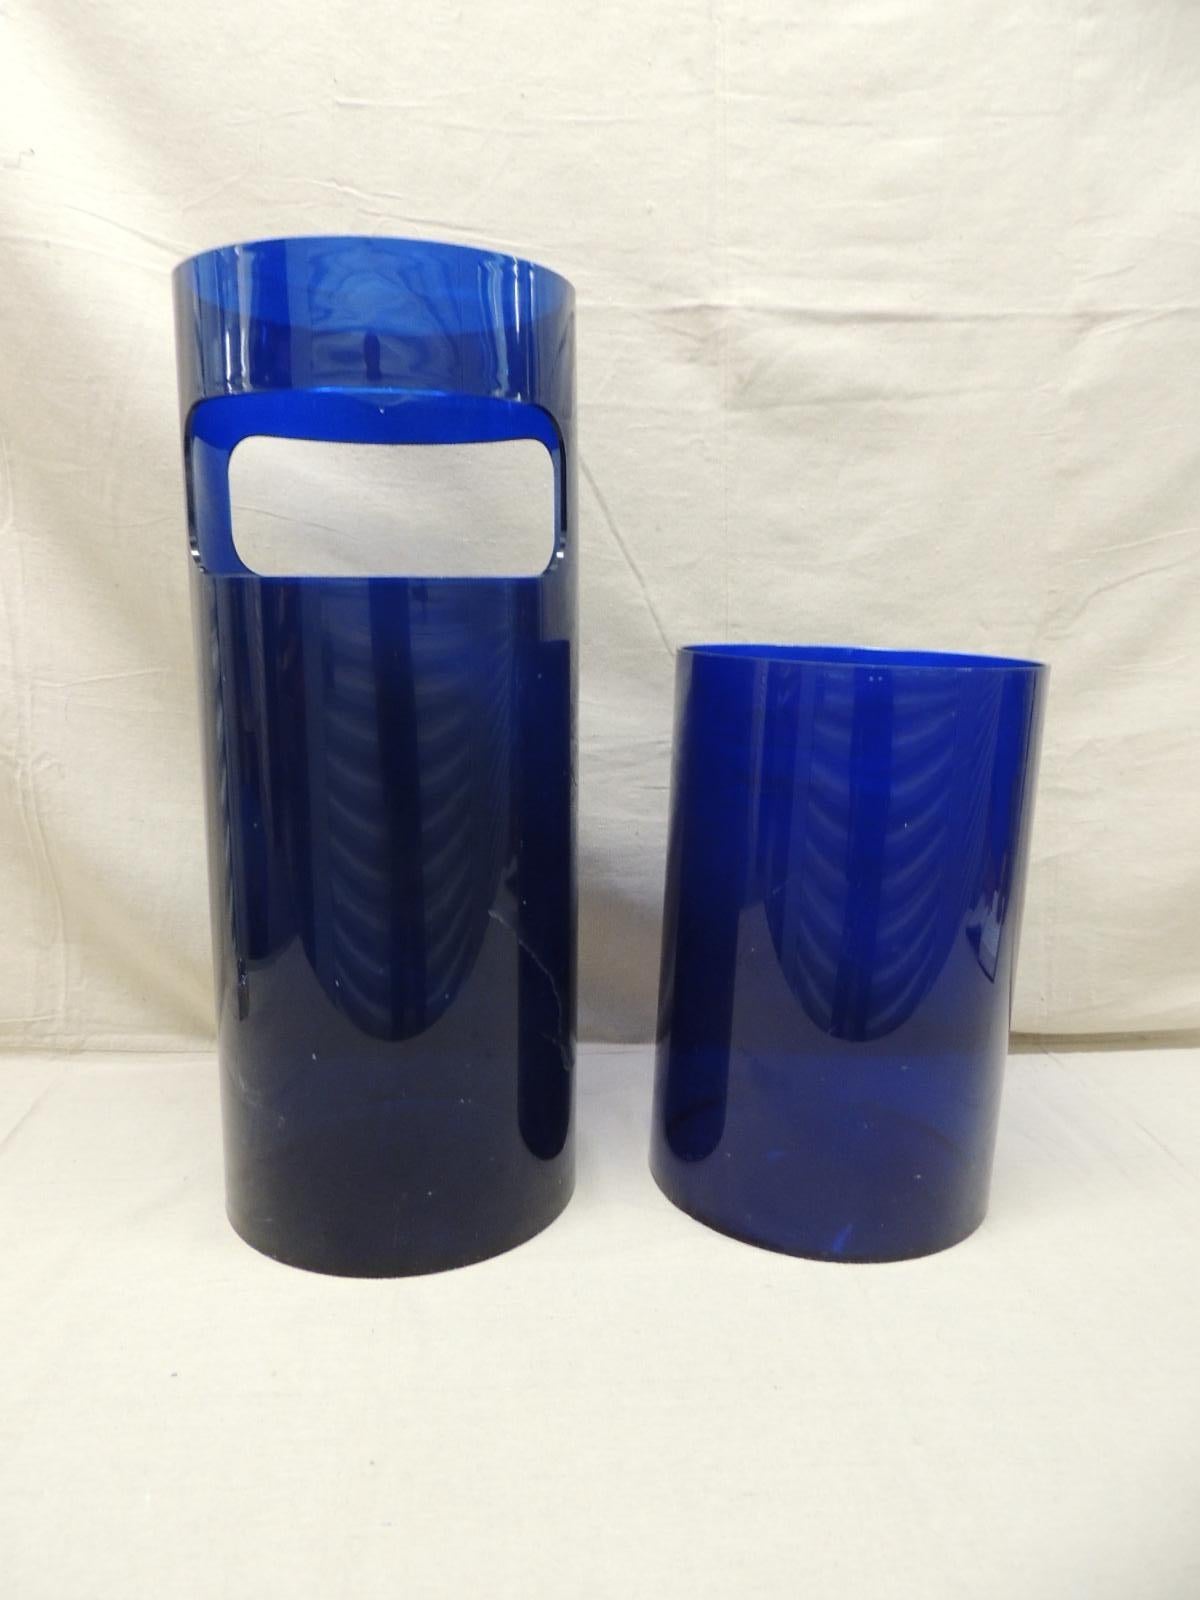 Set of cobalt blue Kartell round acrylic umbrella stand and wastebasket
Wastebasket size: 12